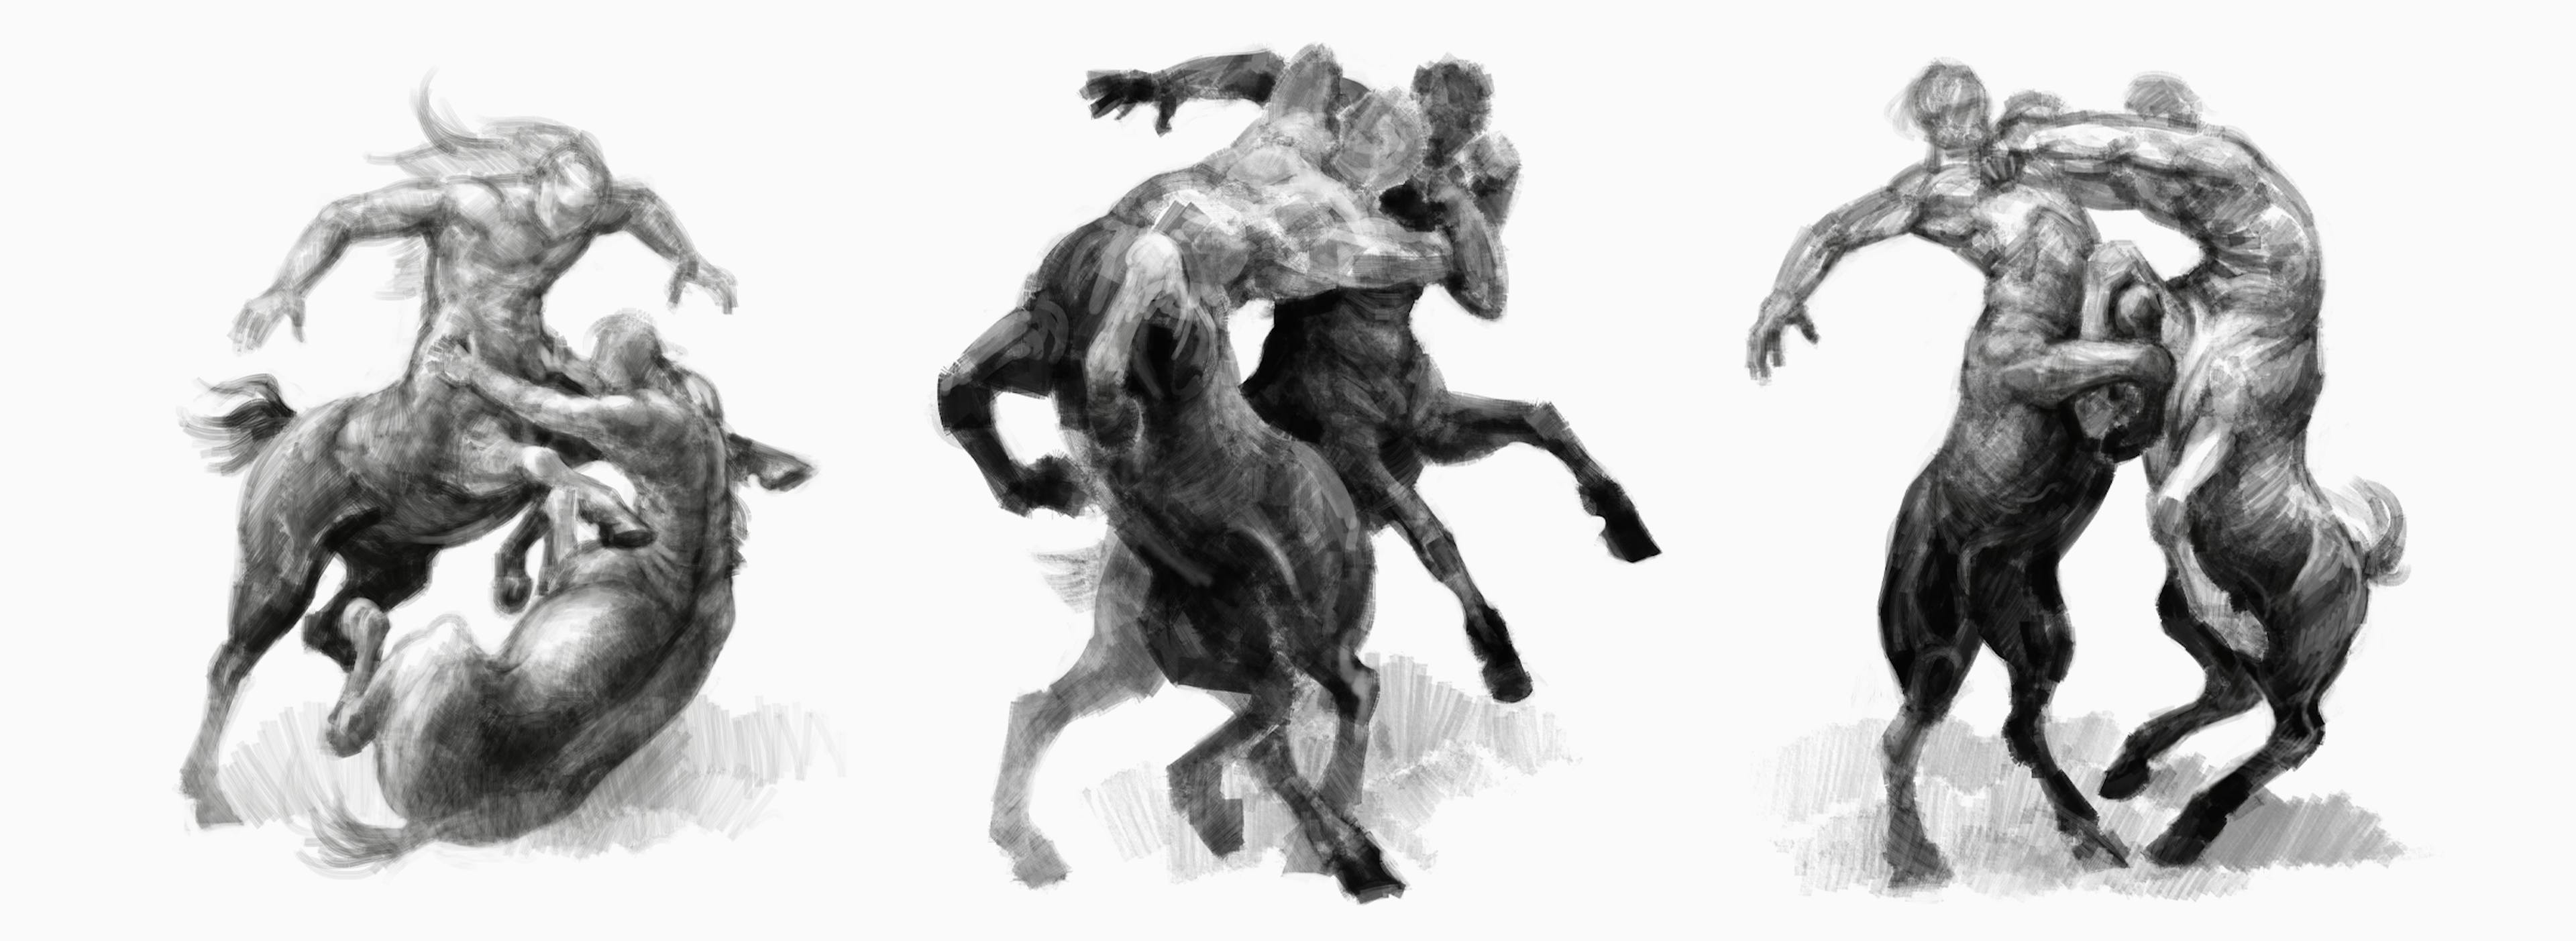 Centaurs fighting